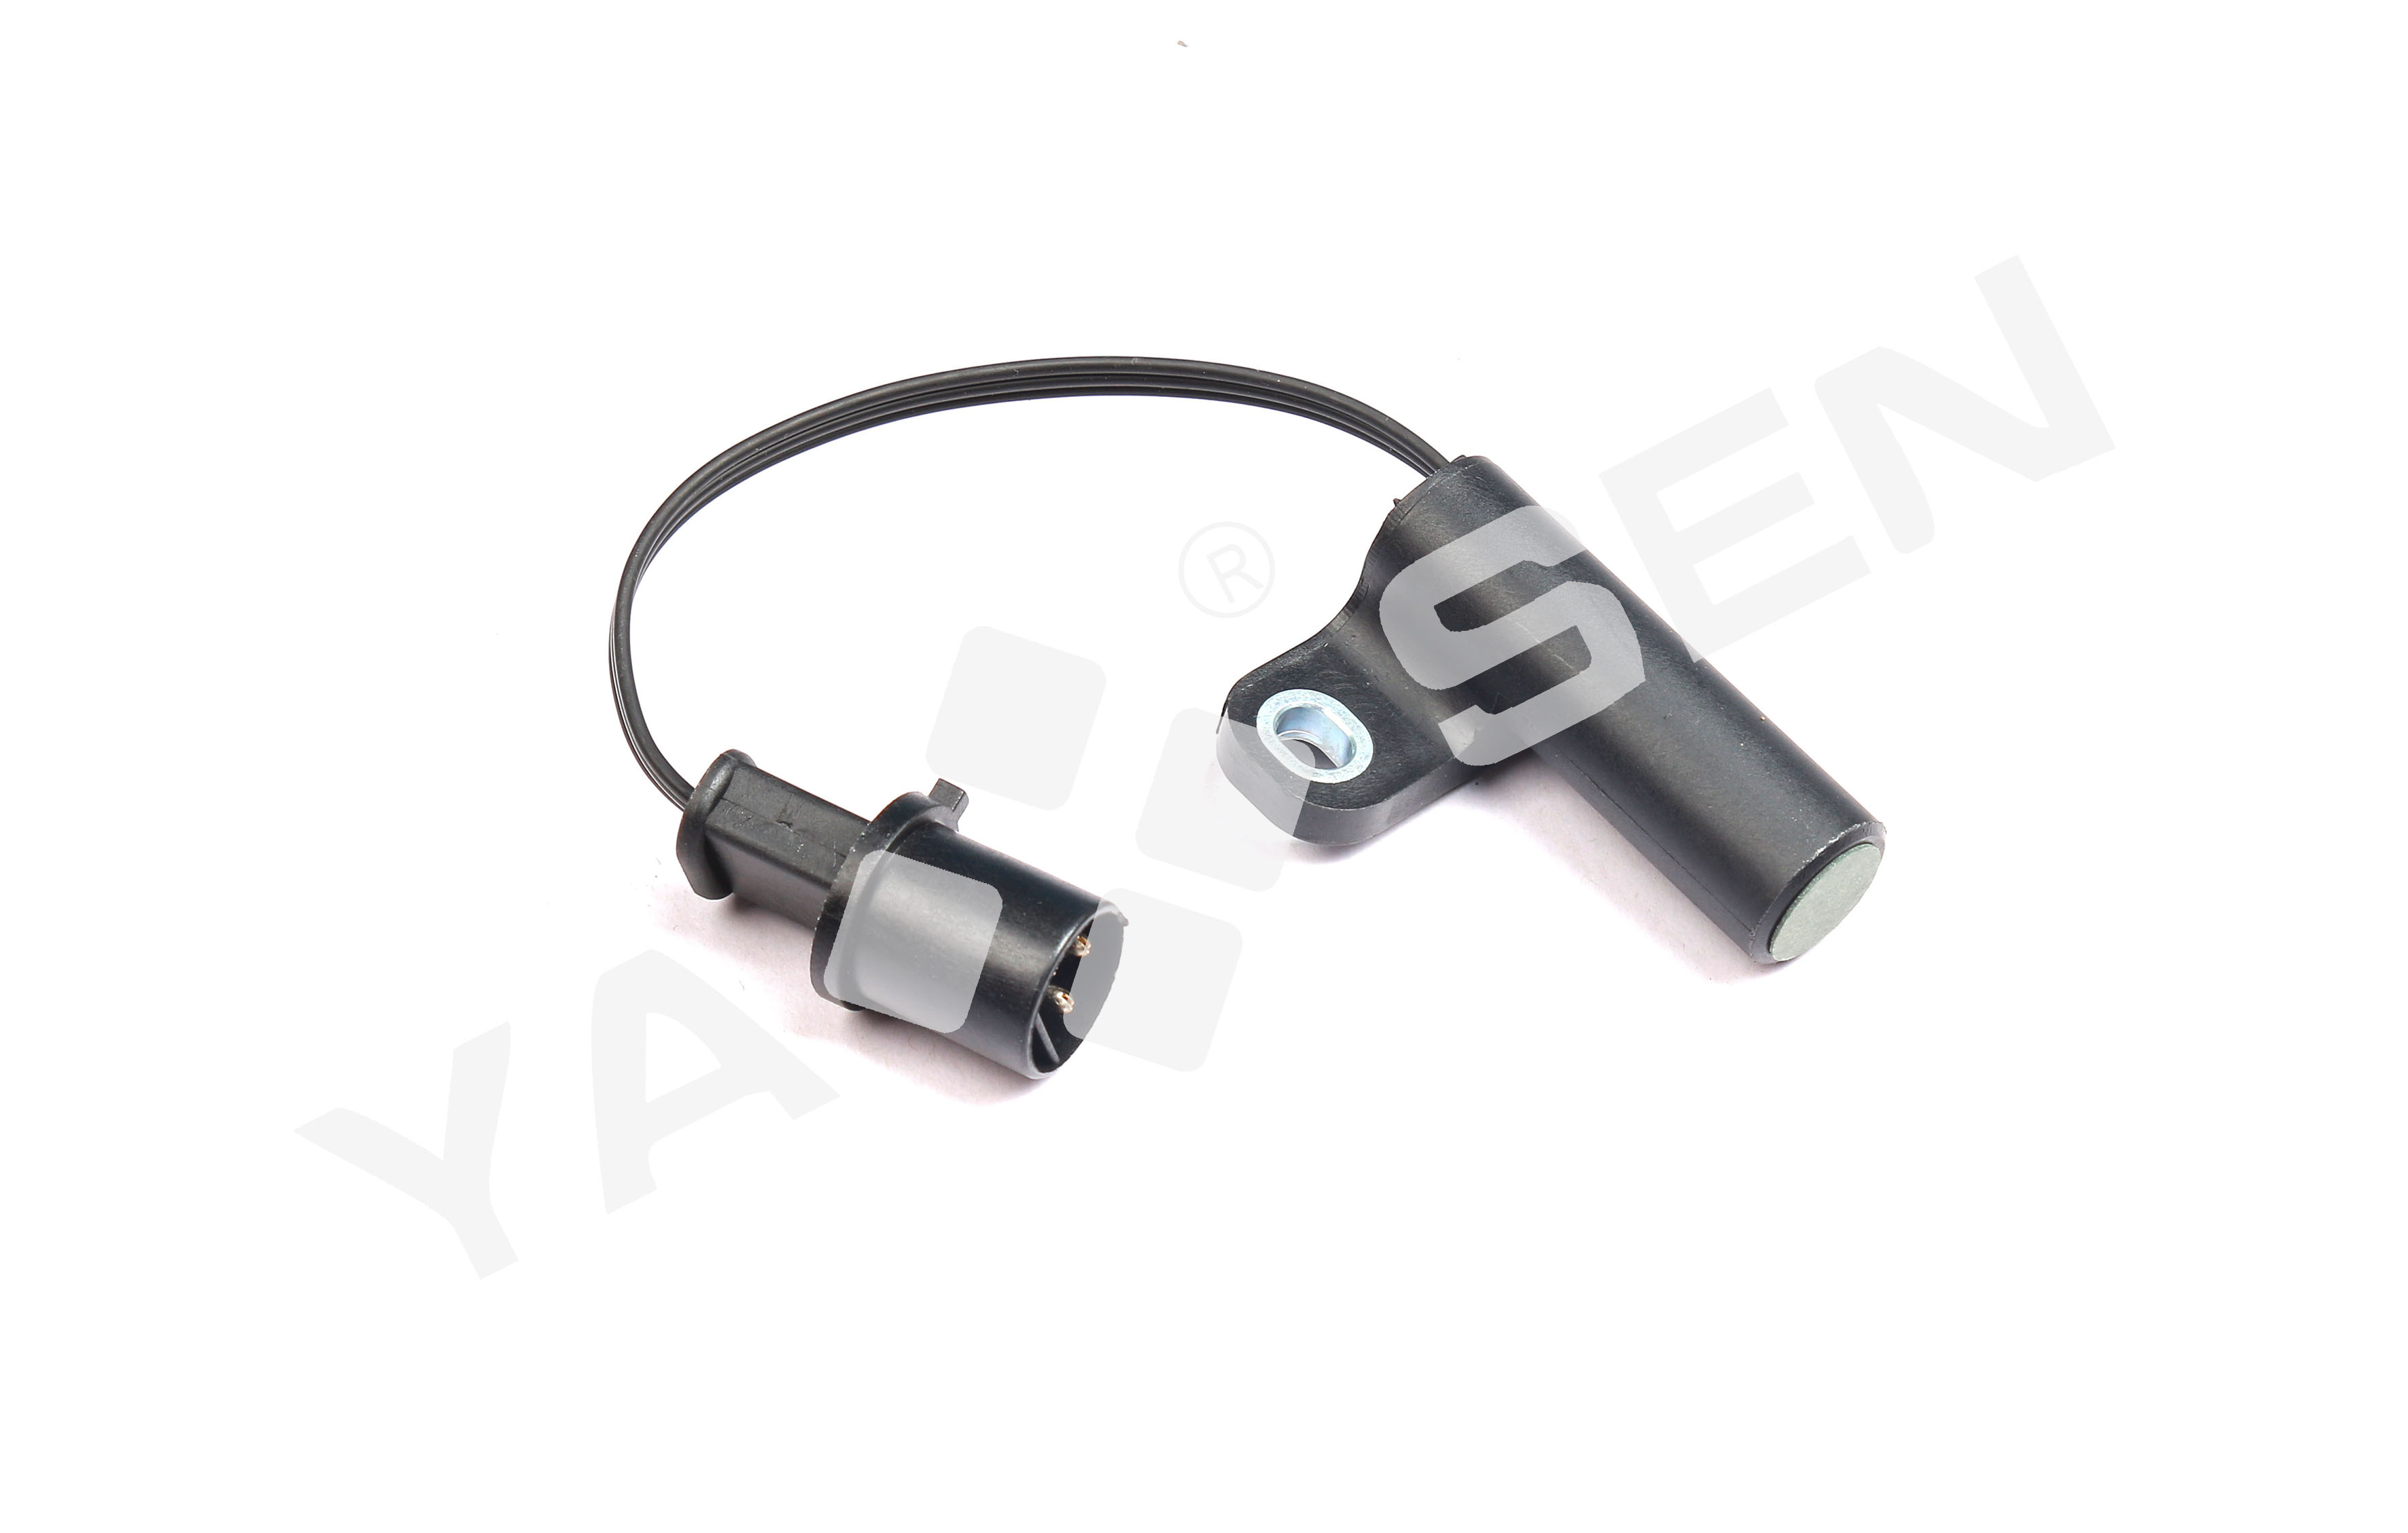 Crankshaft Position Sensor for  CHEVROLET/DODGE, 4443923  4443925  4504224  5S1704  96129  SU355  PC36